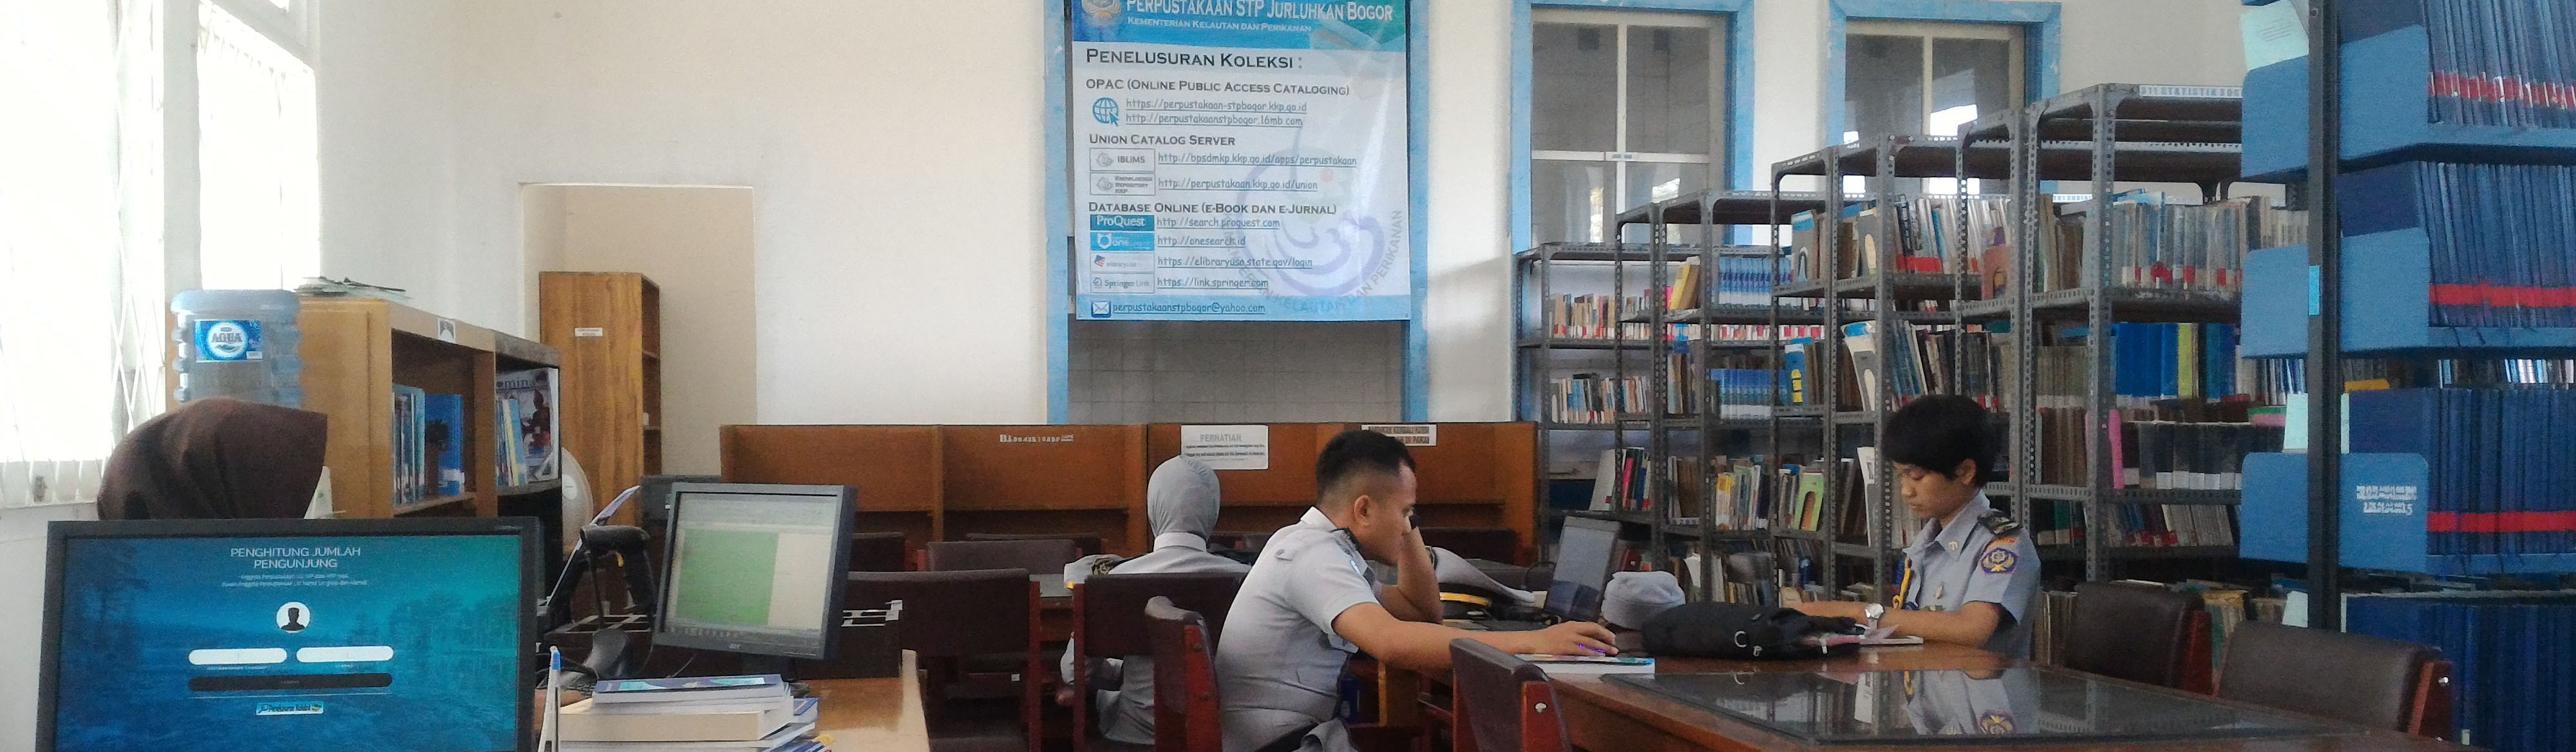 Perpustakaan STP Jurluhkan Bogor